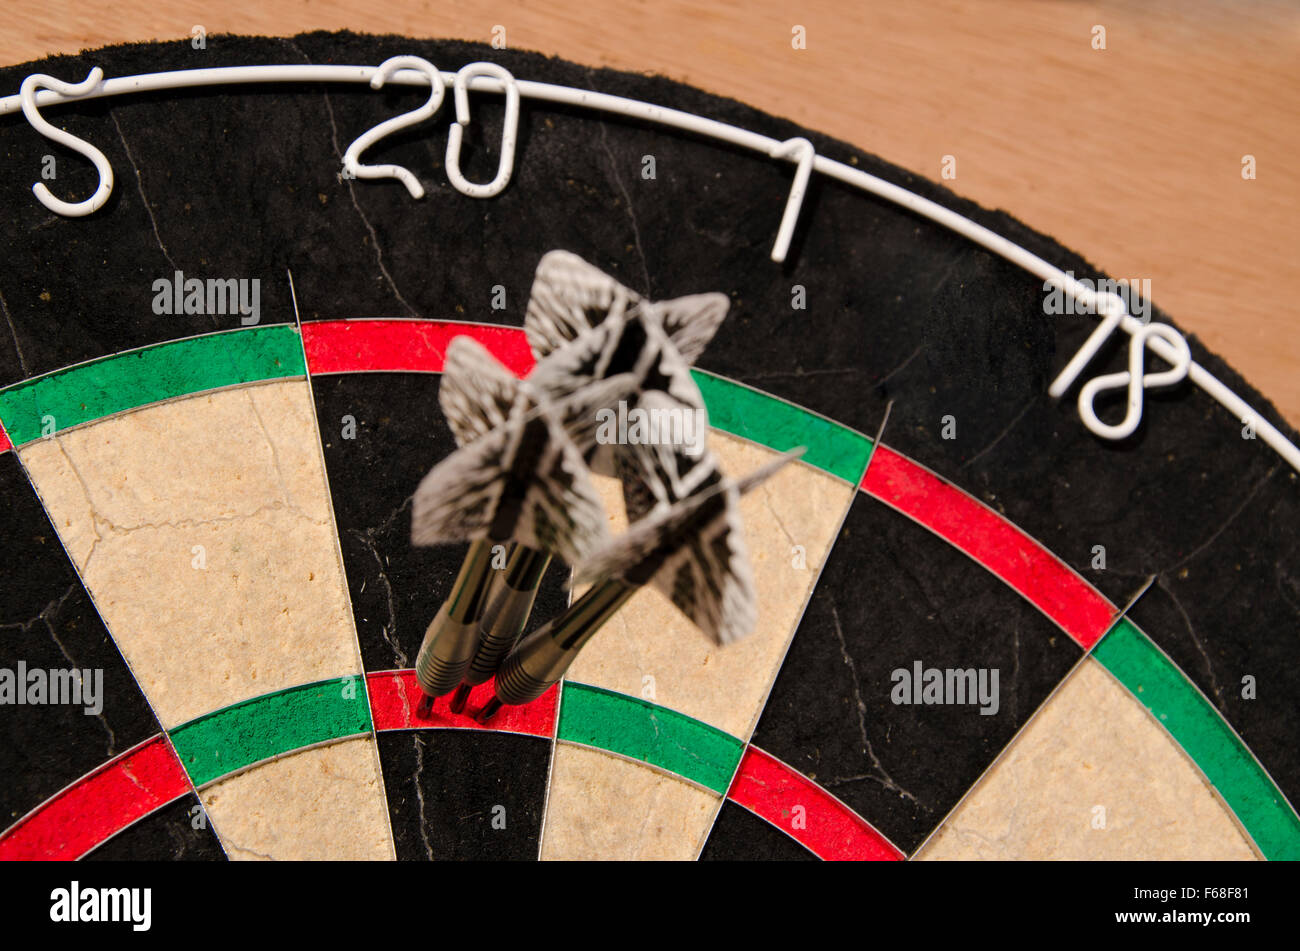 180 Score in Darts Stock Photo - Alamy